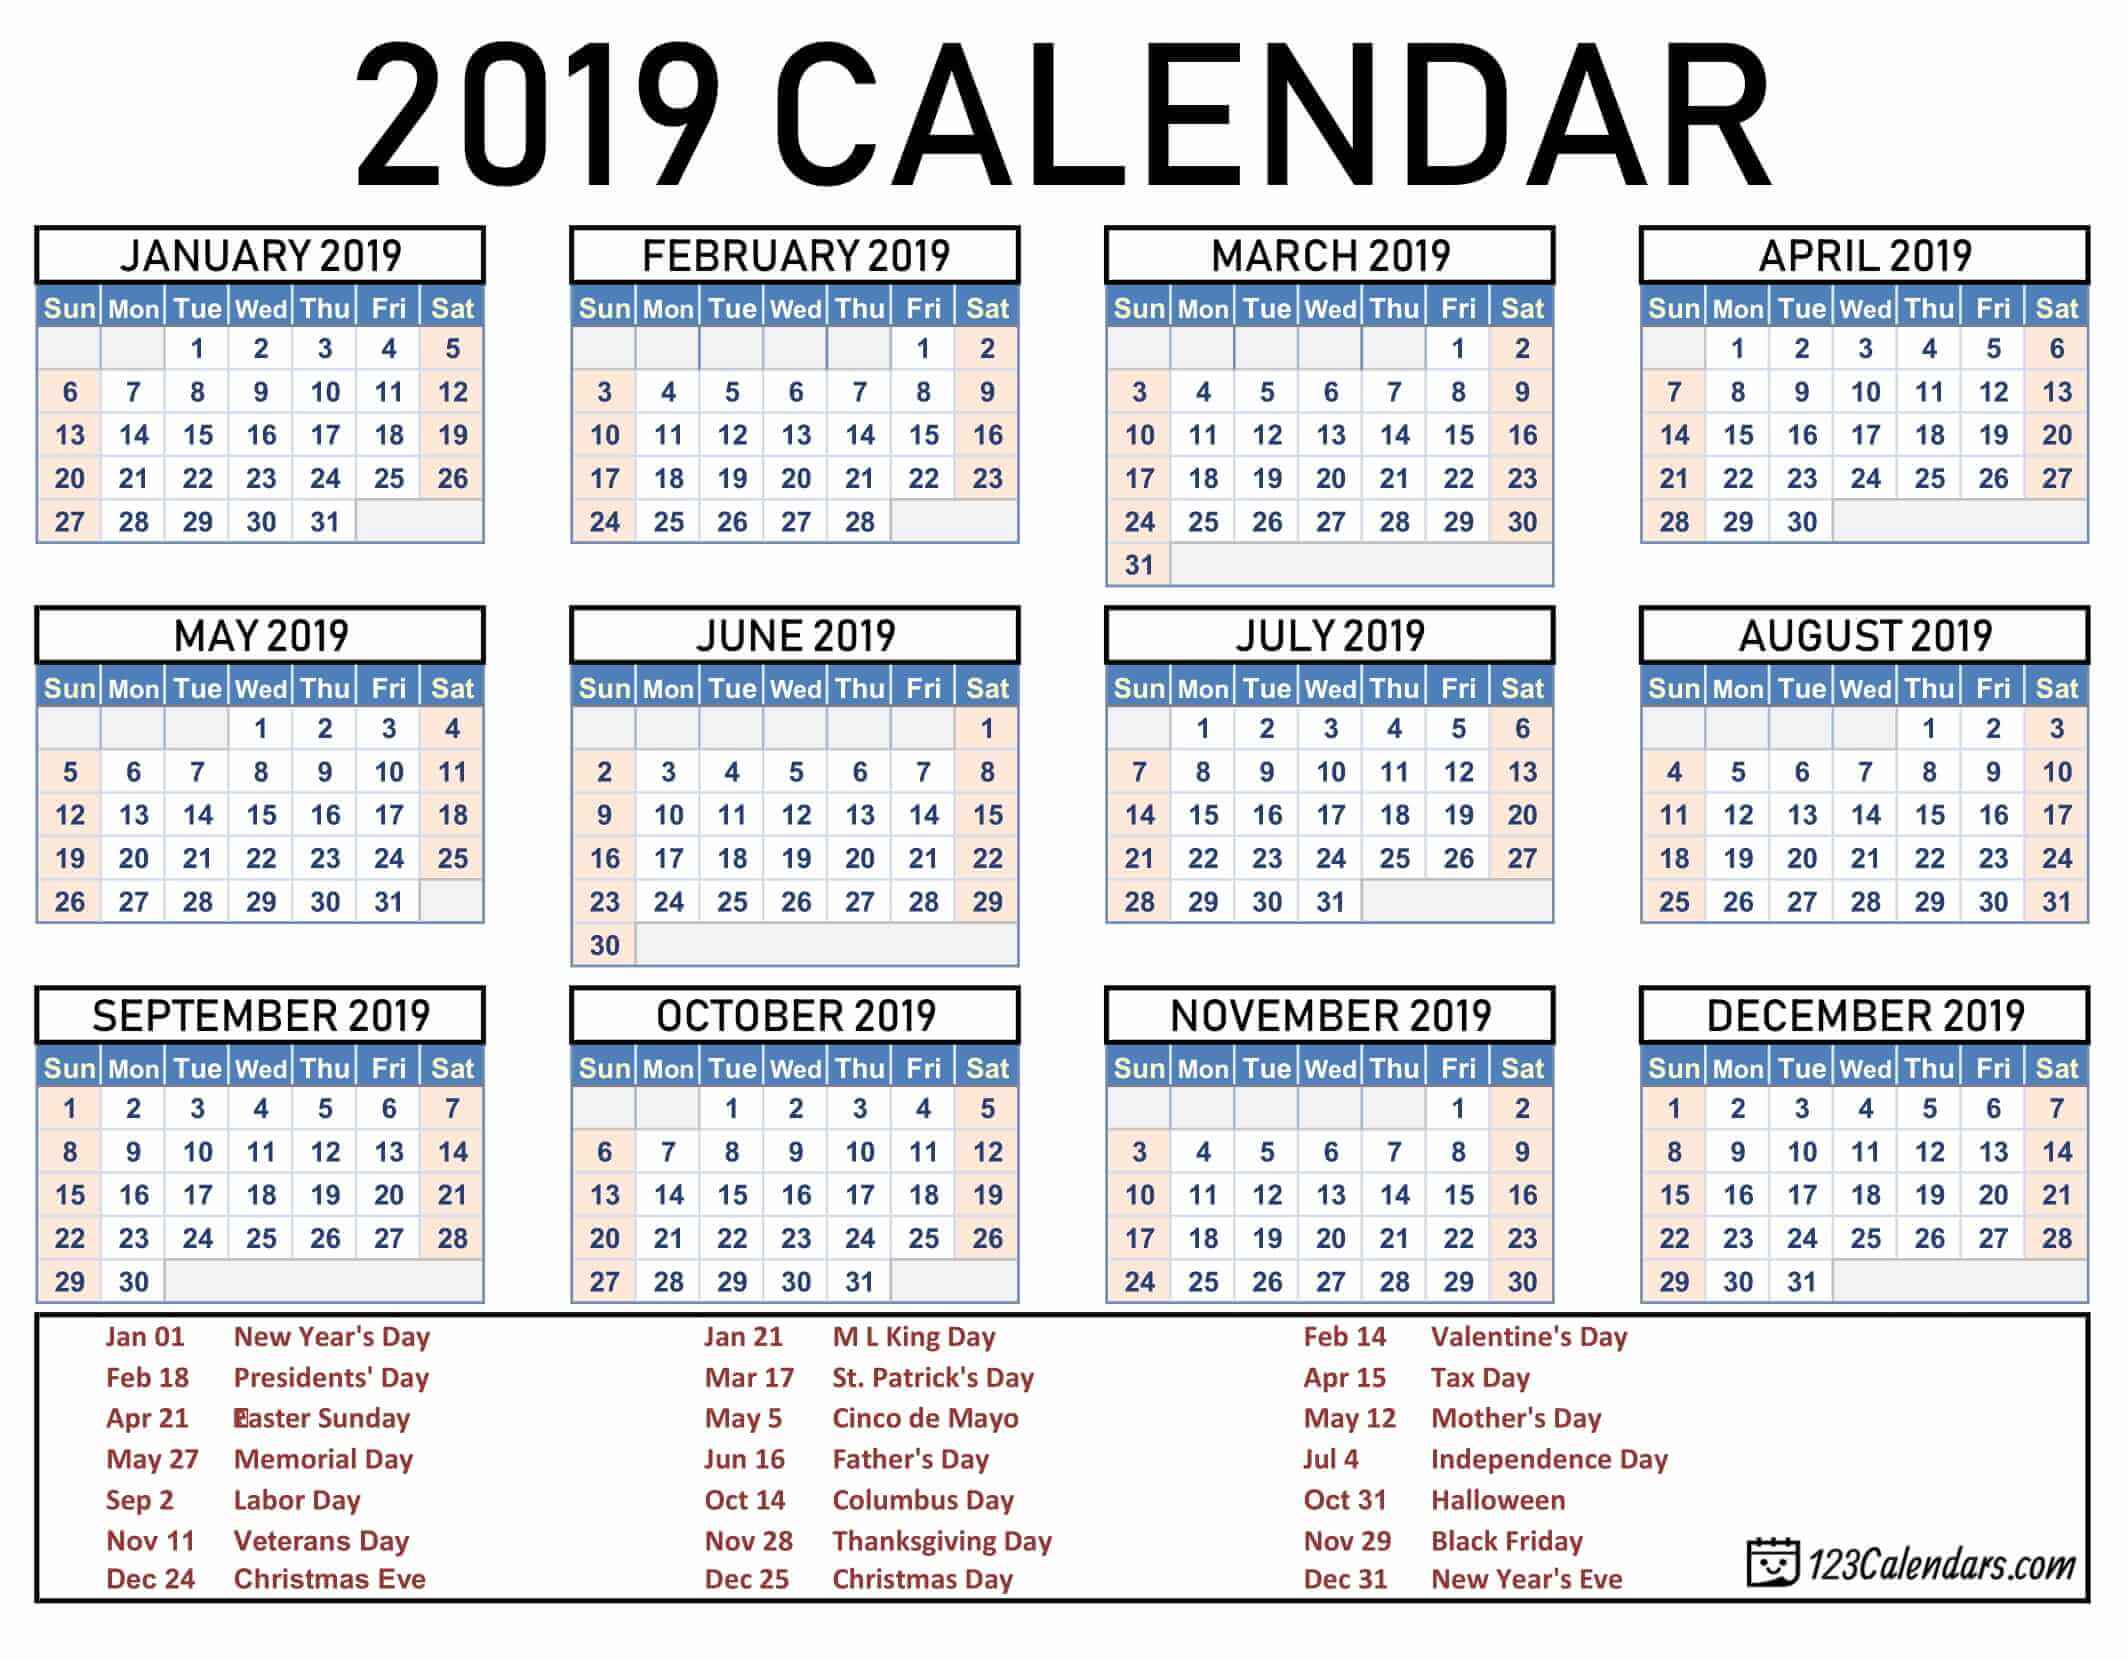 quickcal calendar